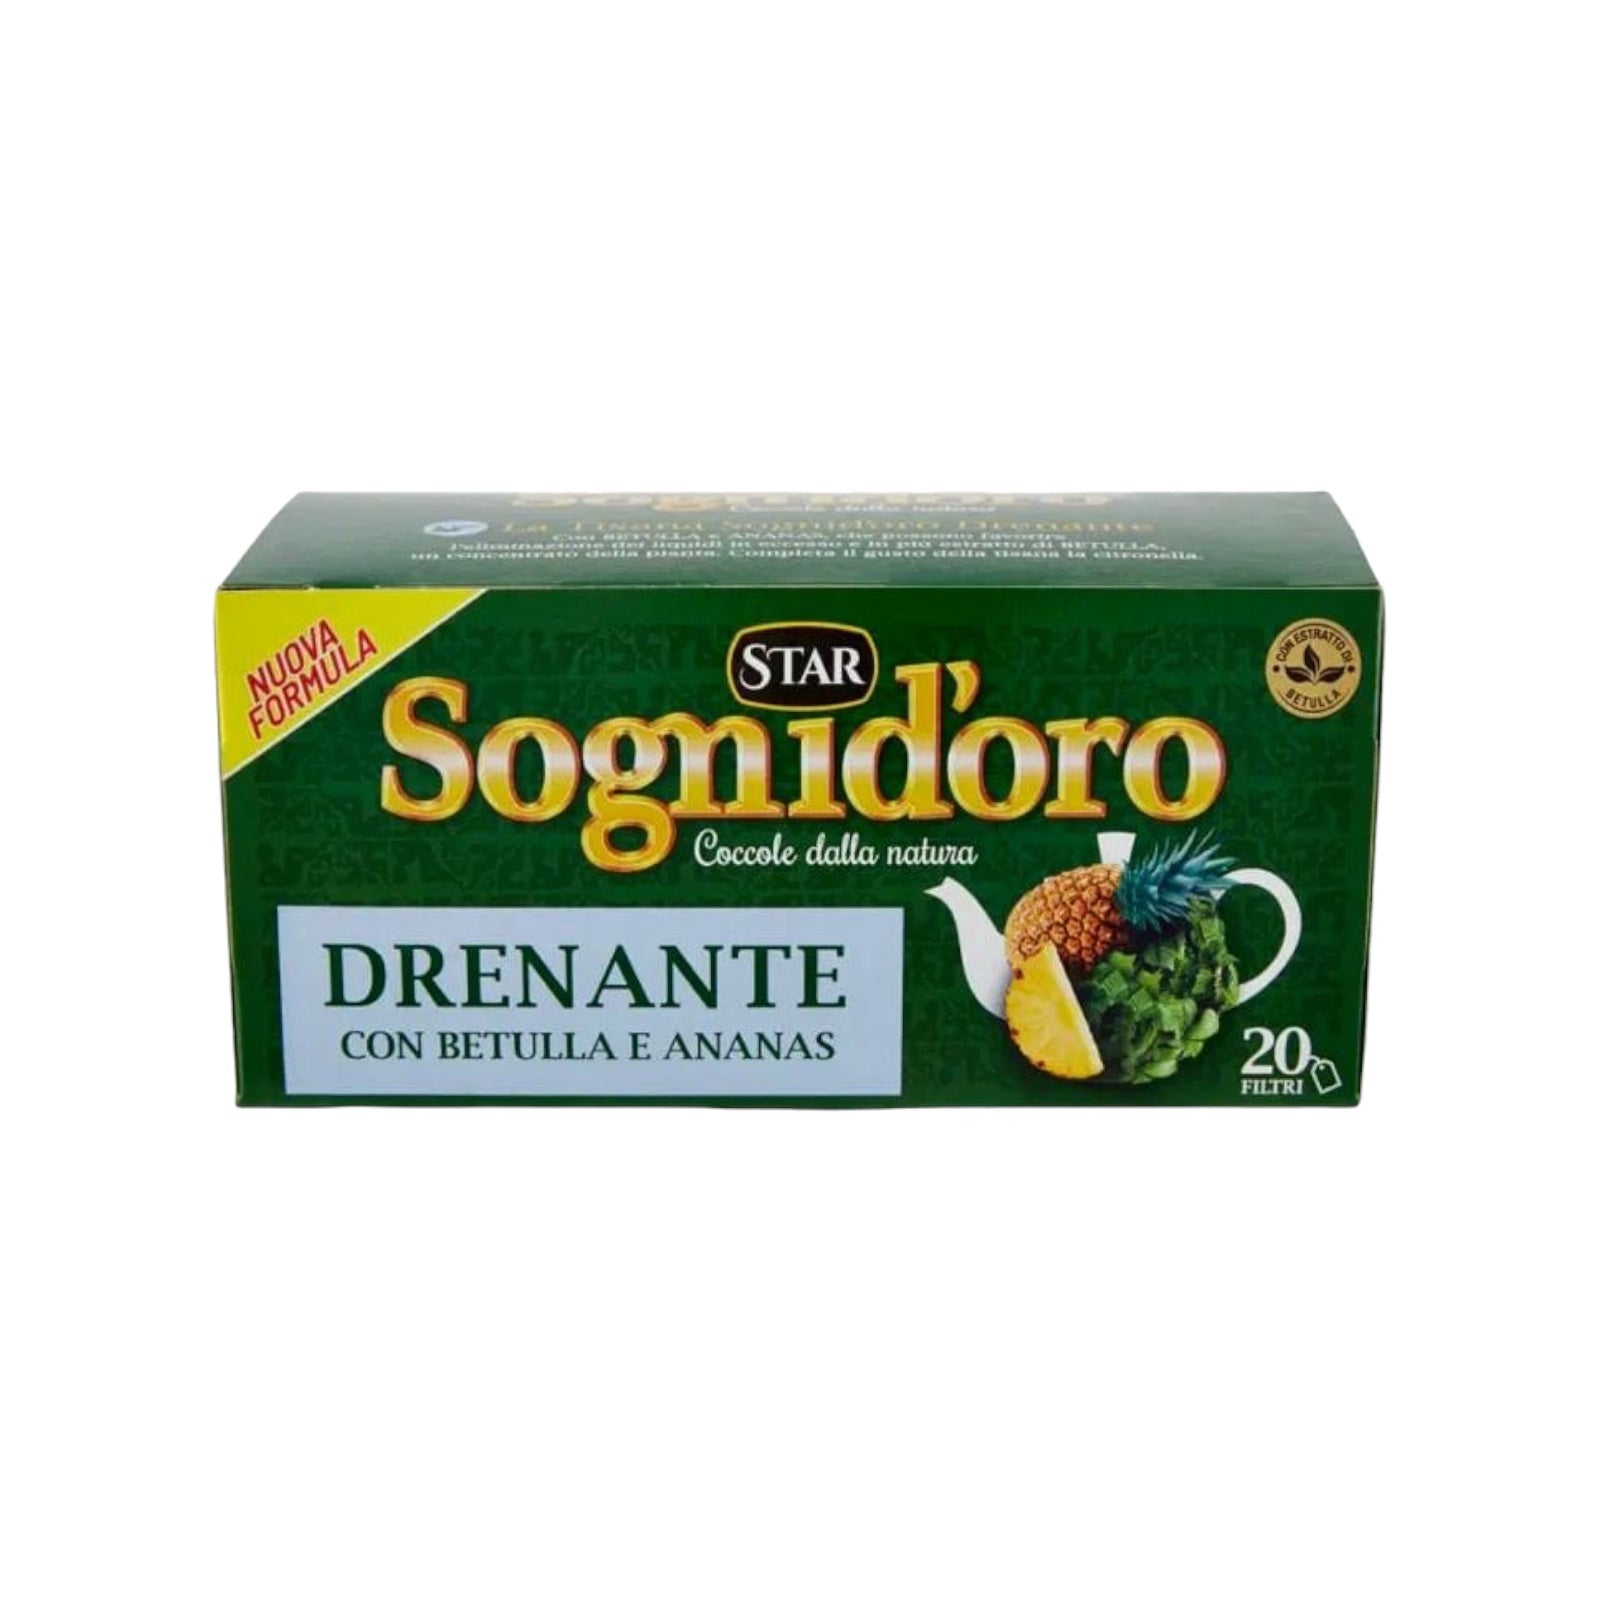 Sogni d’Oro Draining Herbal Tea – 20 Filters
DRENANTE / Betulla e Ananas
Pineapple and Guaraná.